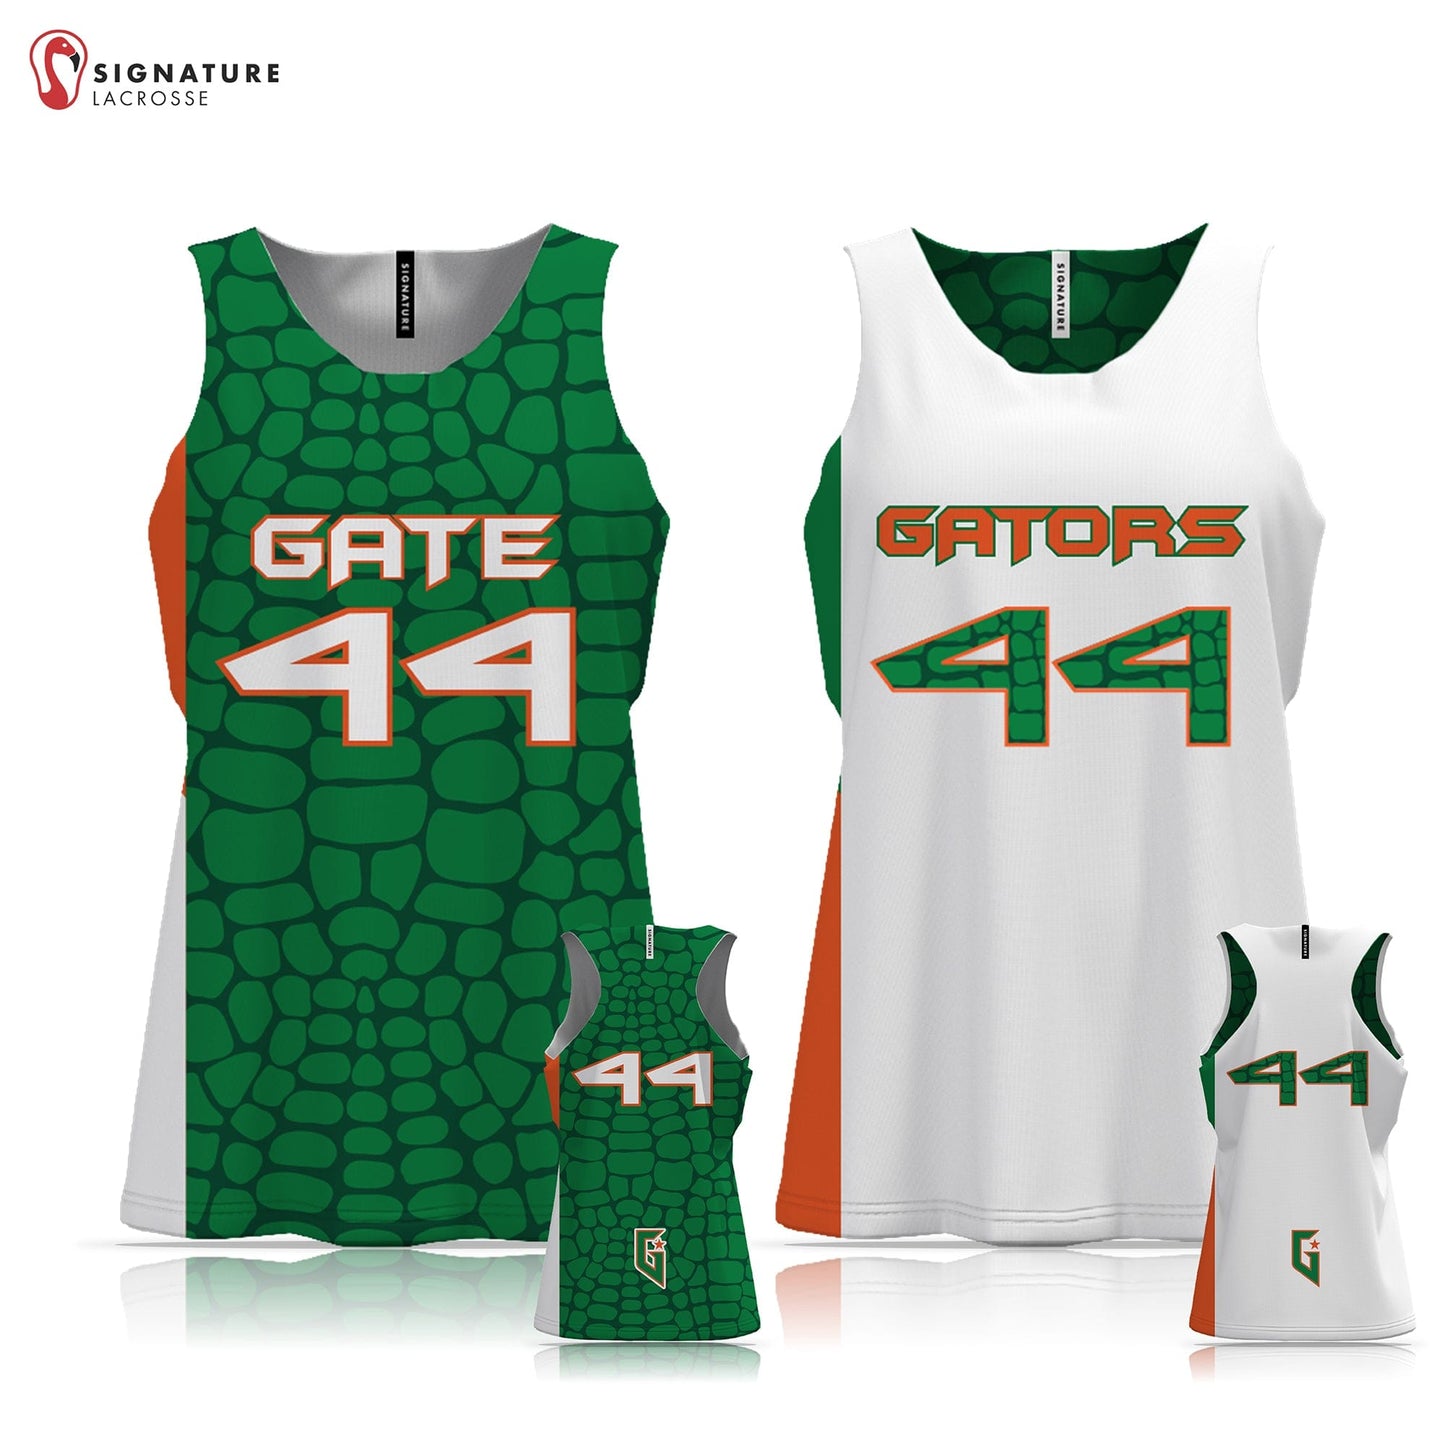 Gateway Gators Lacrosse Women's Game Pinnie: 5/6 Signature Lacrosse